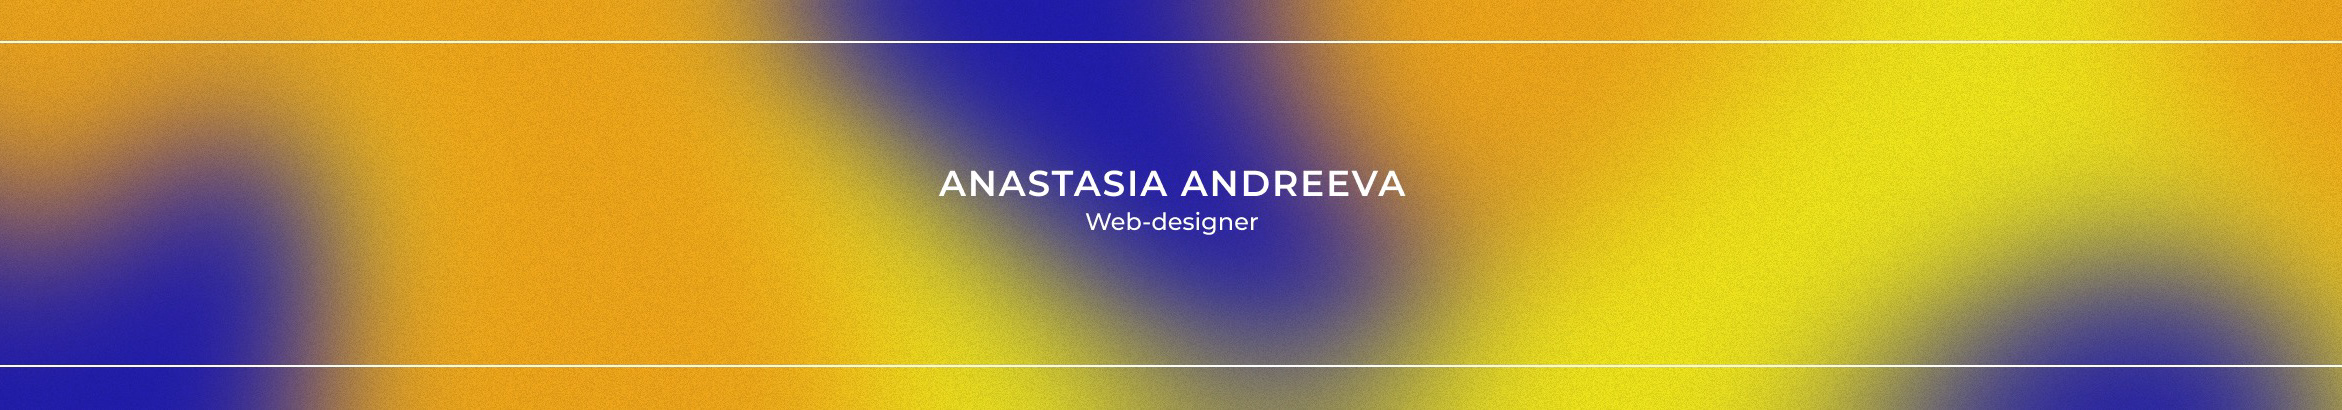 Anastasia Andreeva's profile banner